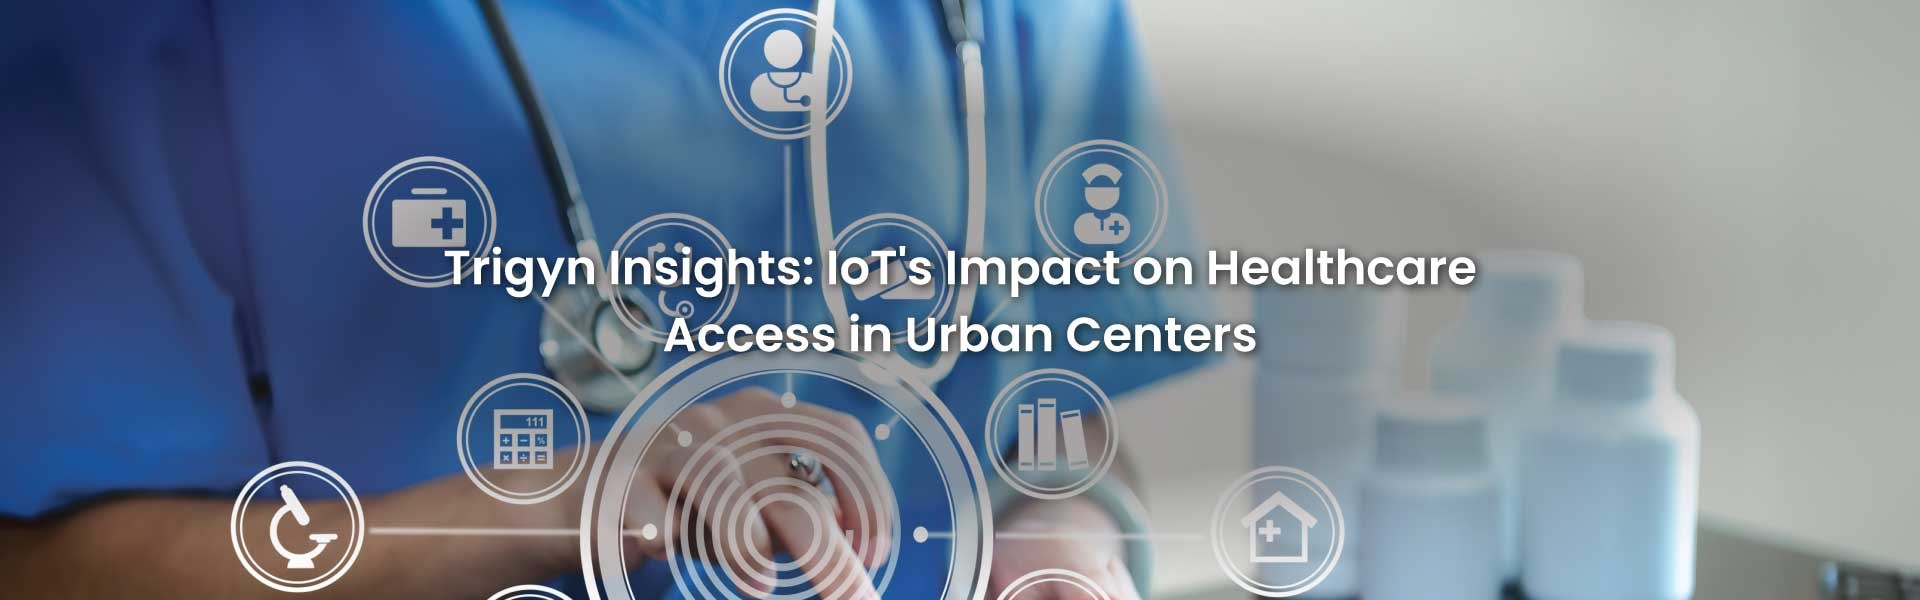 Healthcare Access in Urban Centers